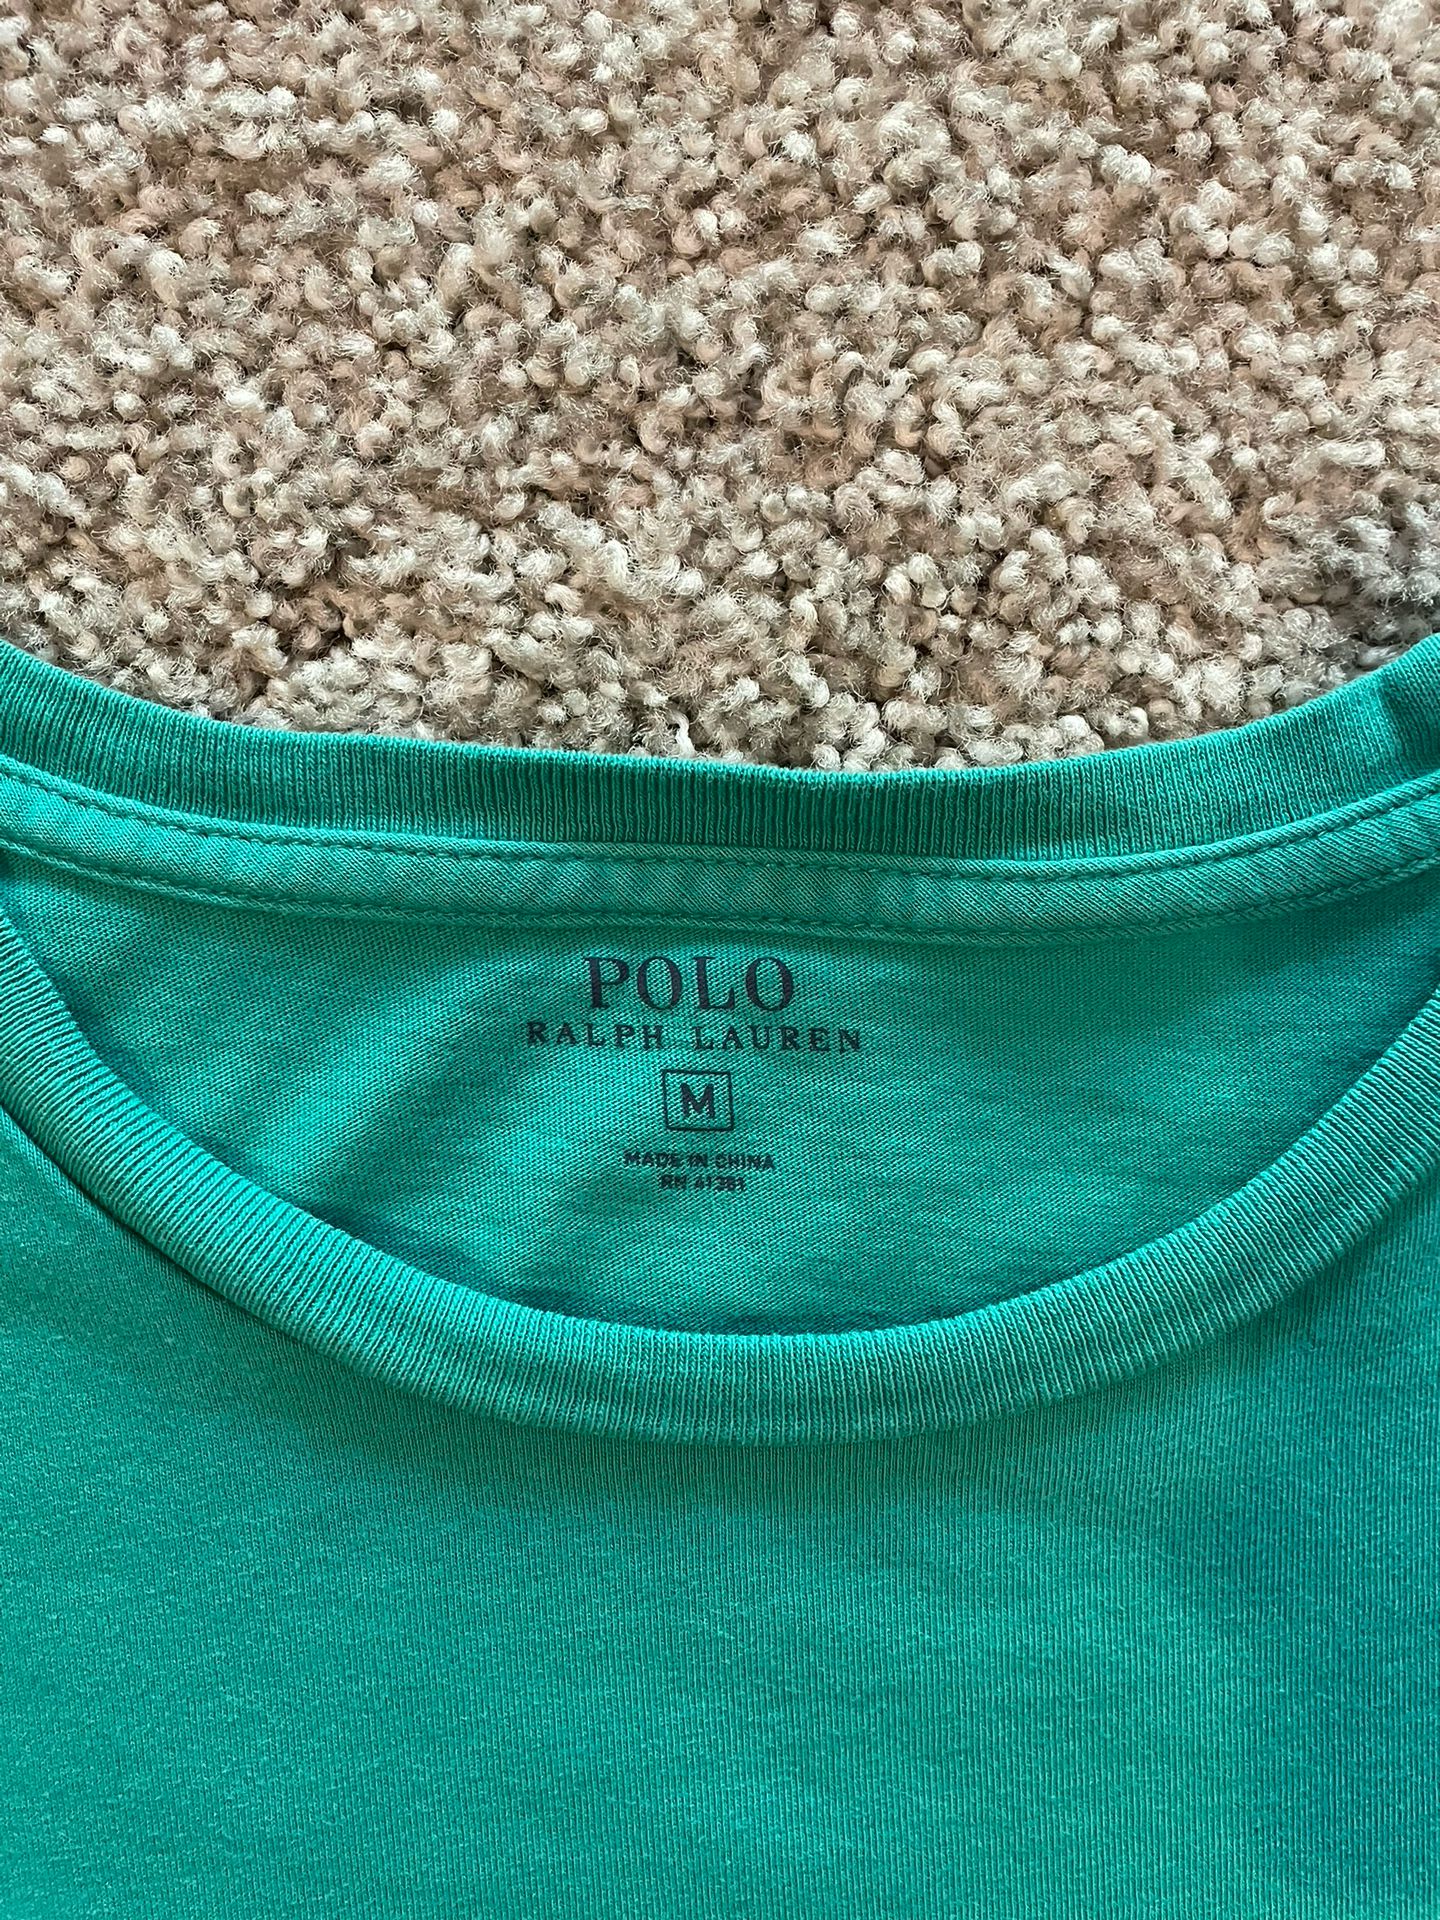 Polo Ralph Lauren T Shirt Green Short Sleeve Pocket Crew Neck, Men’s Medium